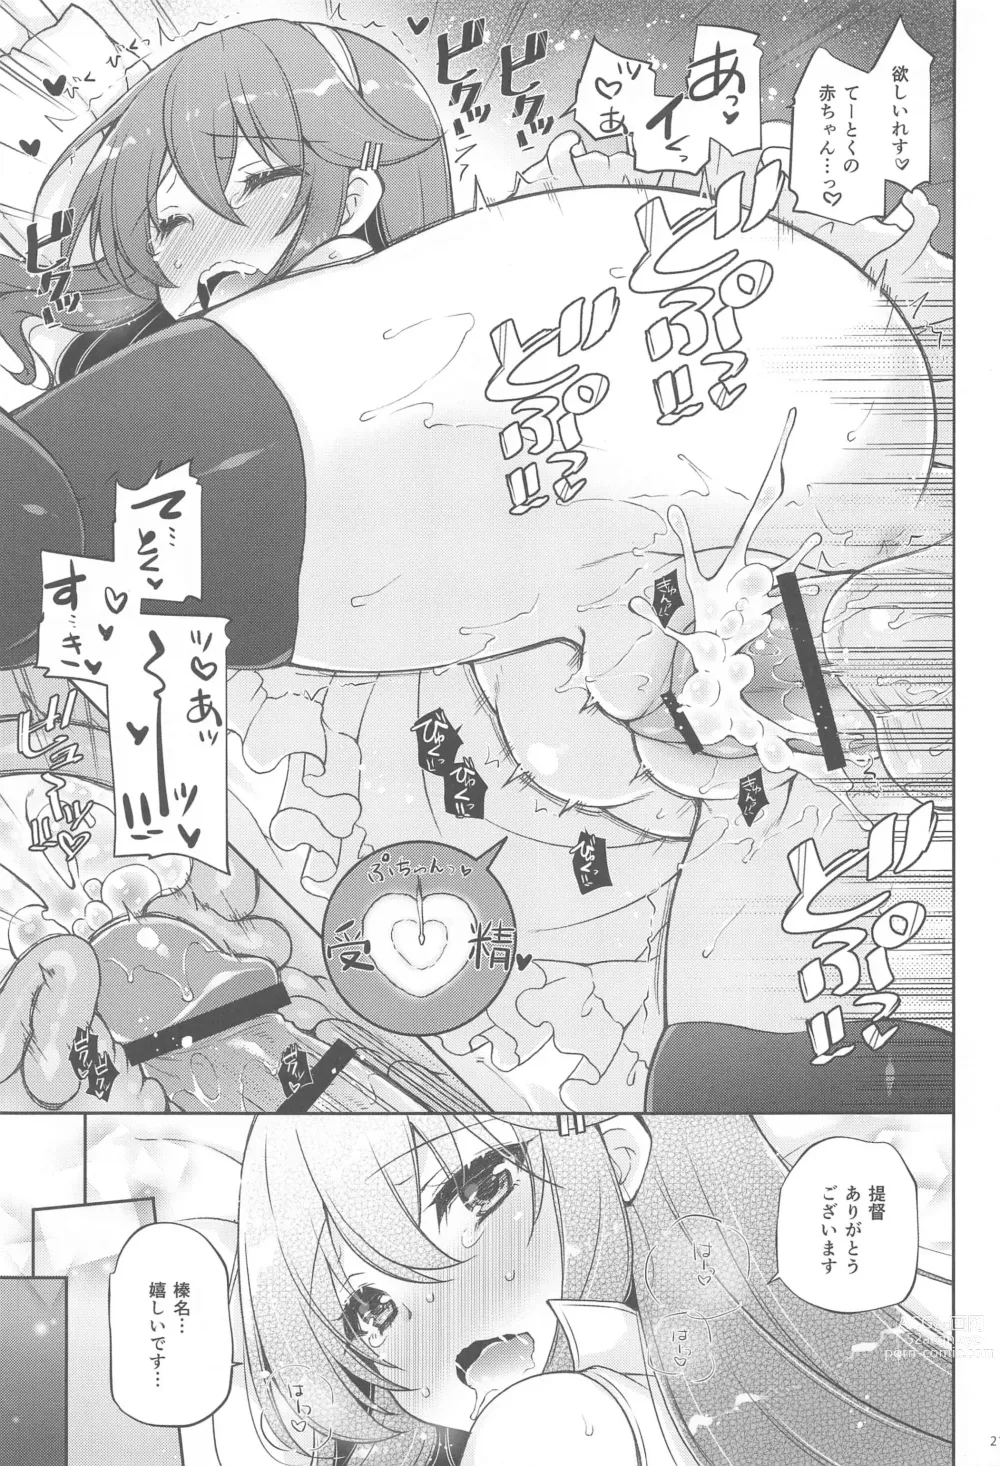 Page 20 of doujinshi Ware, Haruna to Haramase Yasen ni Totsunyuusu!!